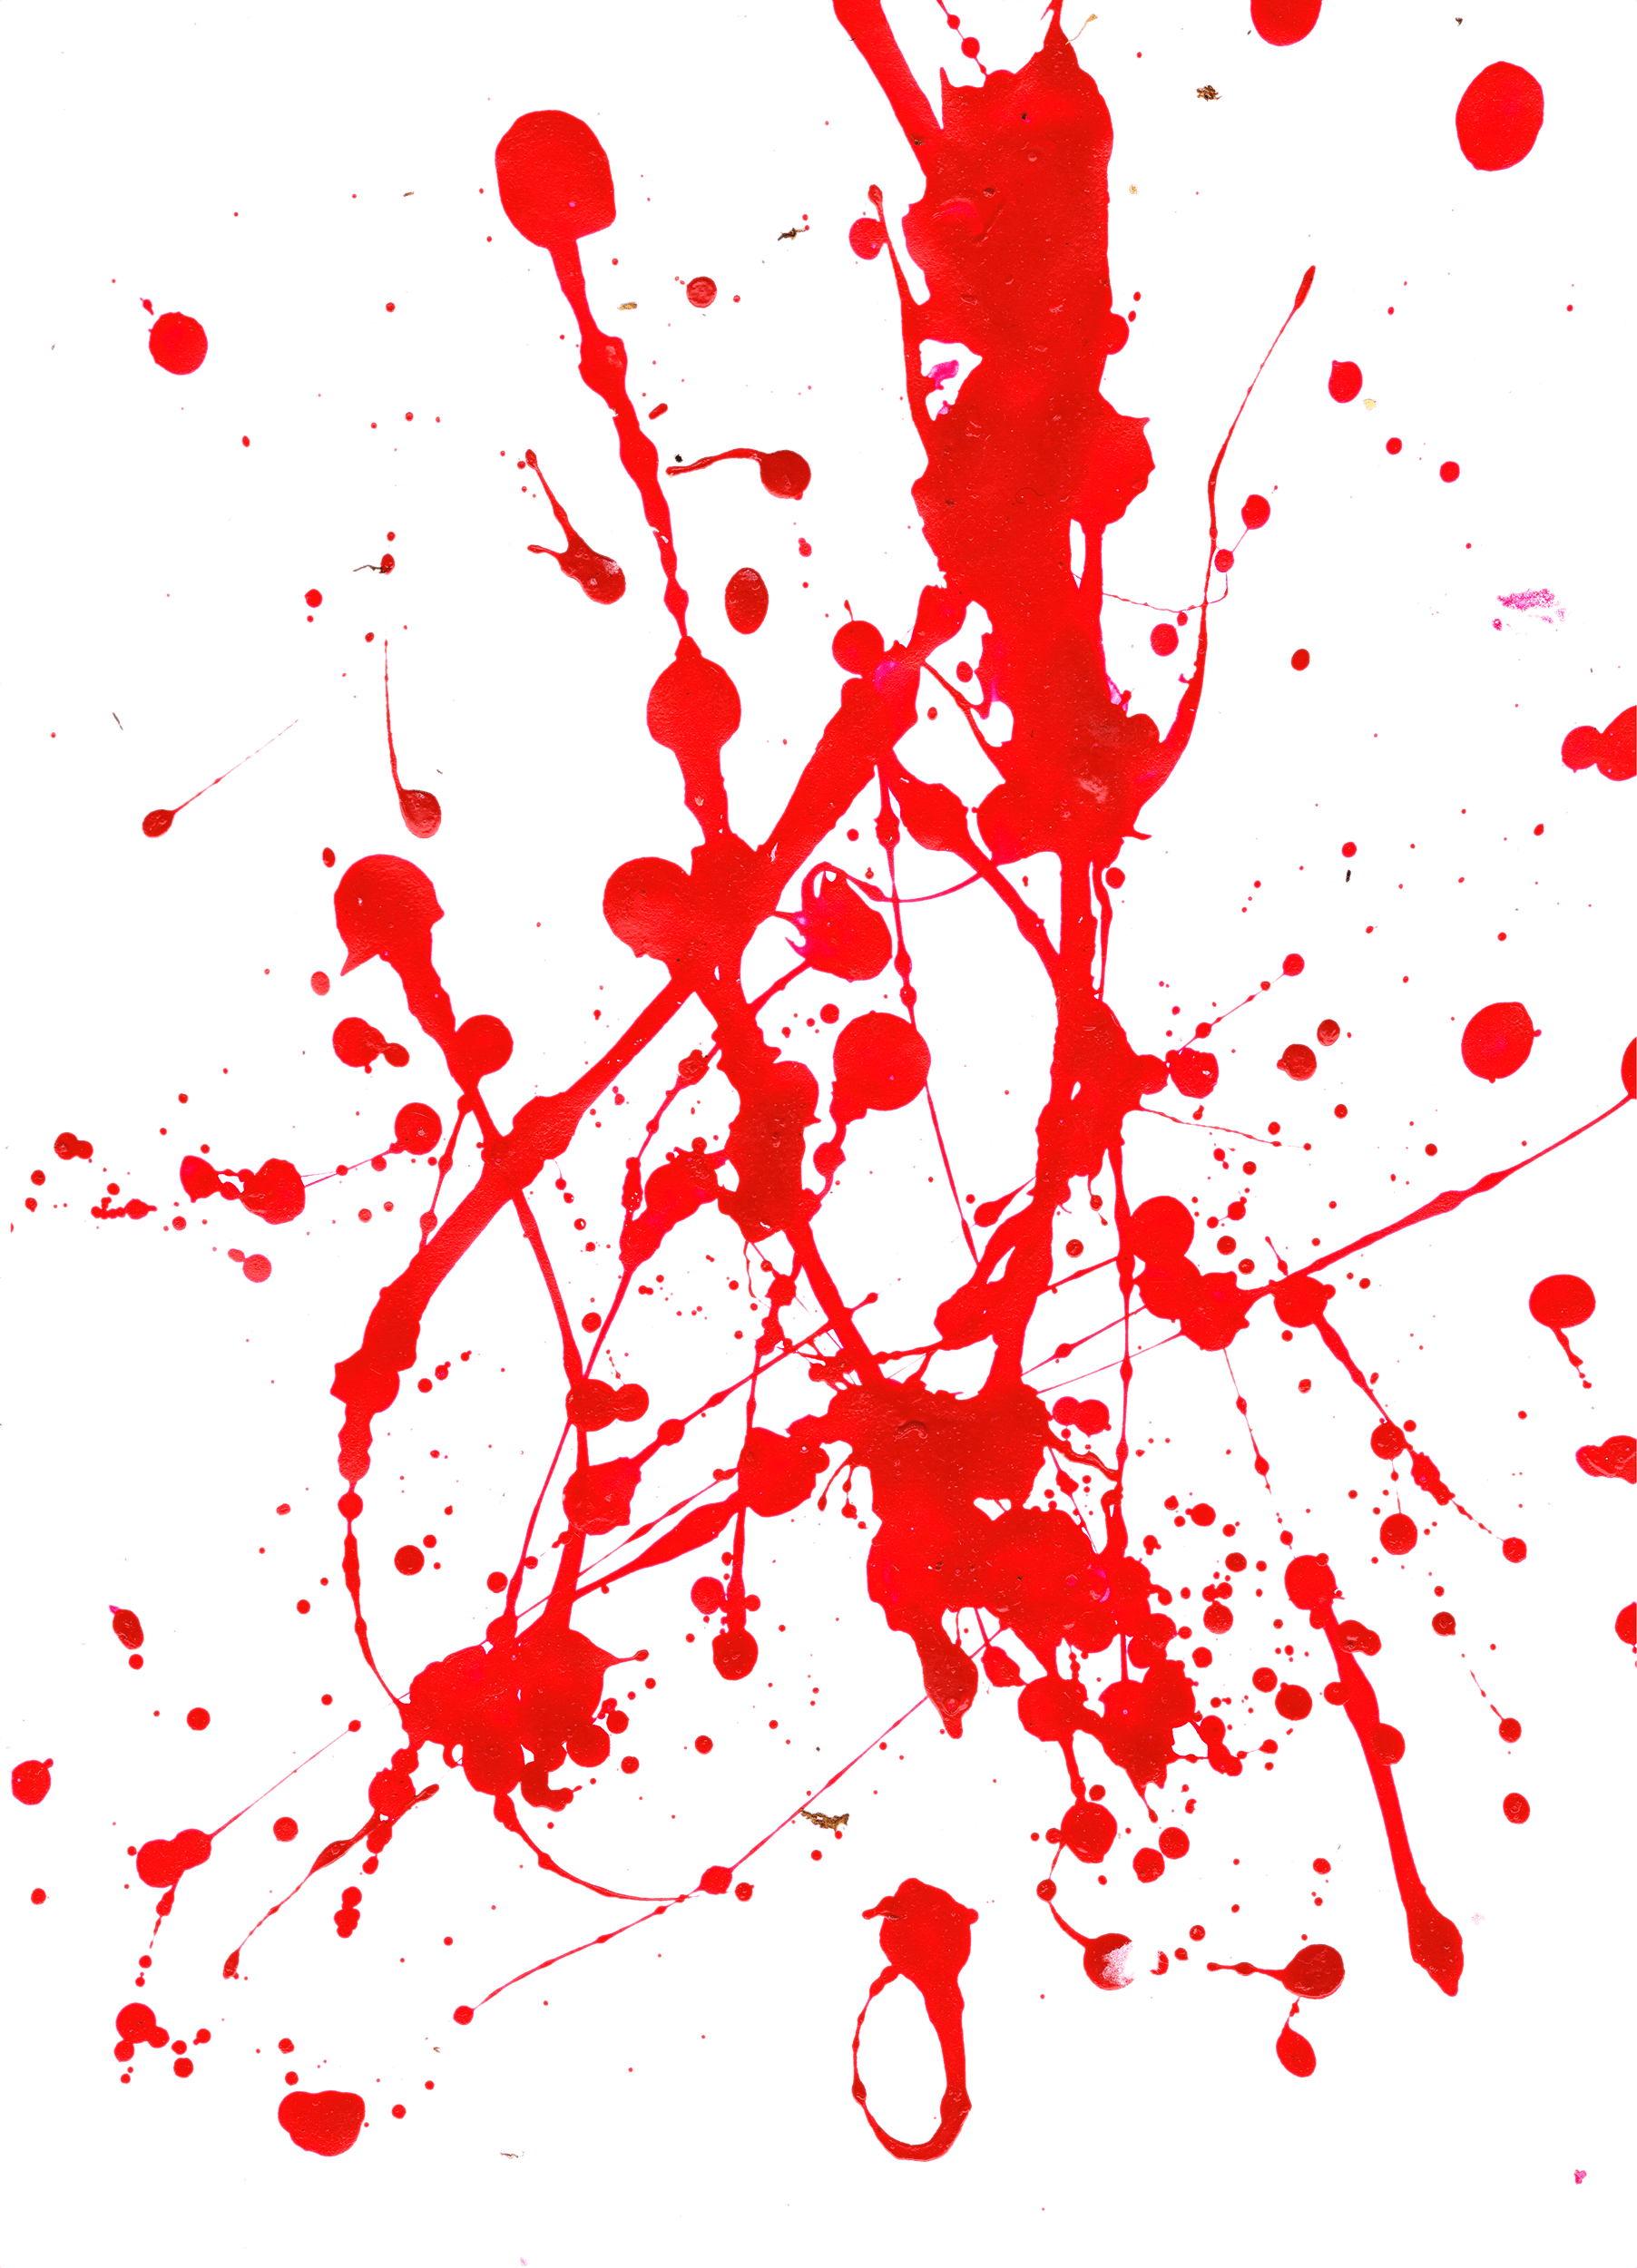 Red Paint Splatter transparent PNG - StickPNG